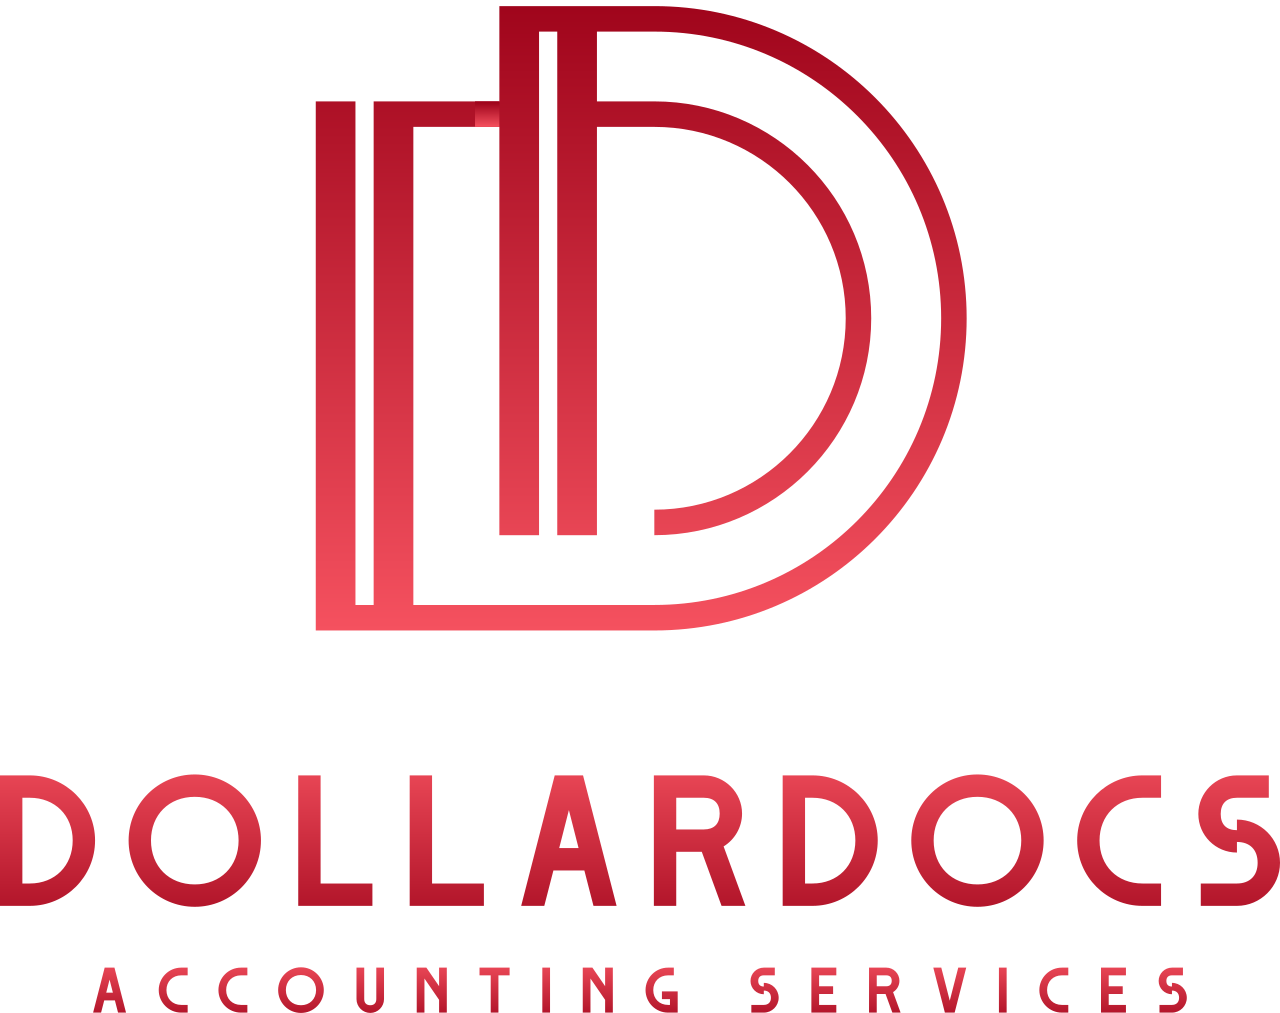 DollarDocs's logo